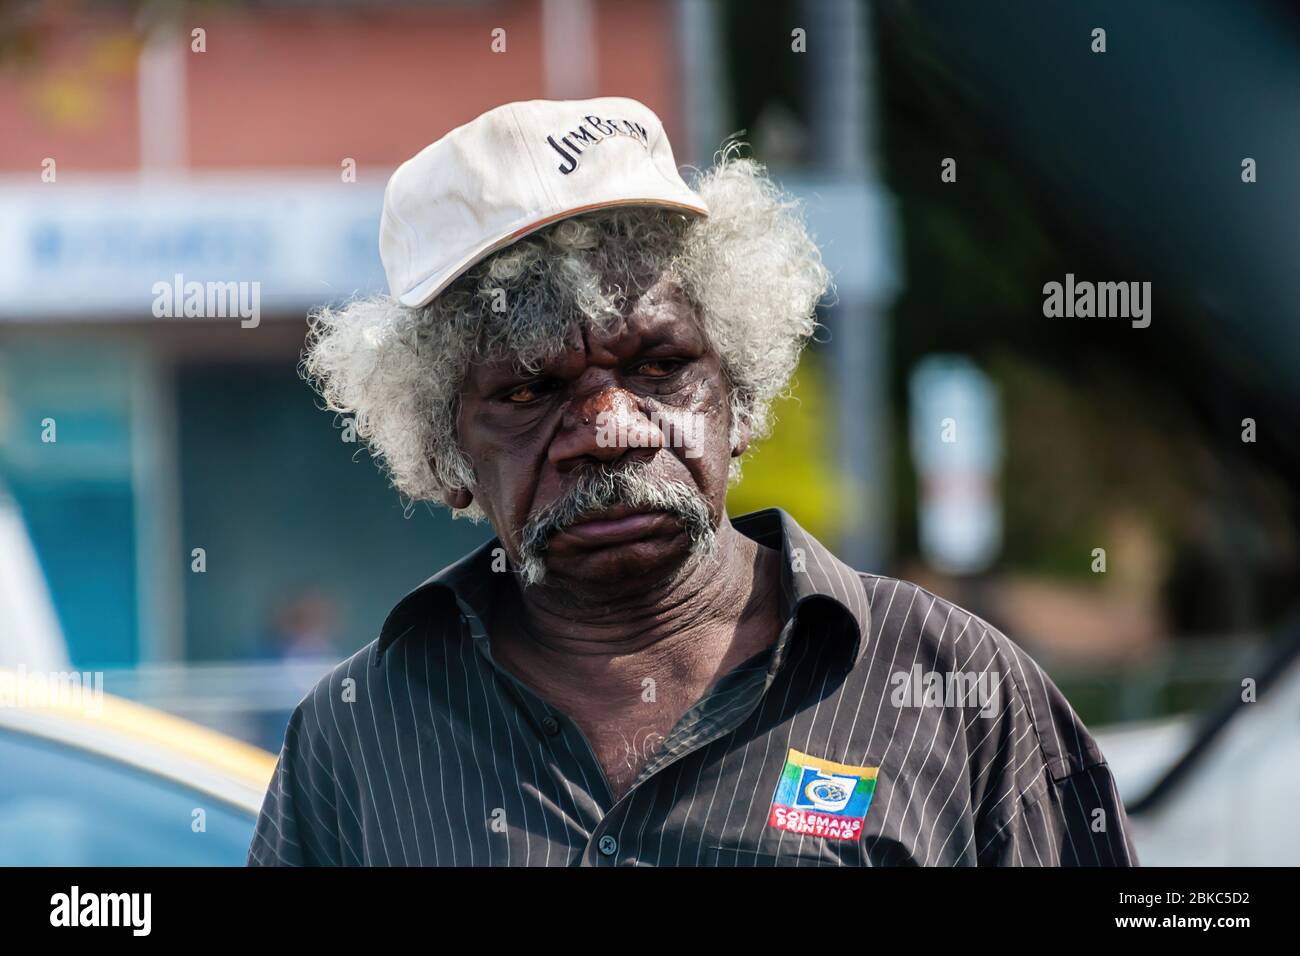 Katherine, Australia - July 17, 2011: A portrait of the aboriginal man Stock Photo